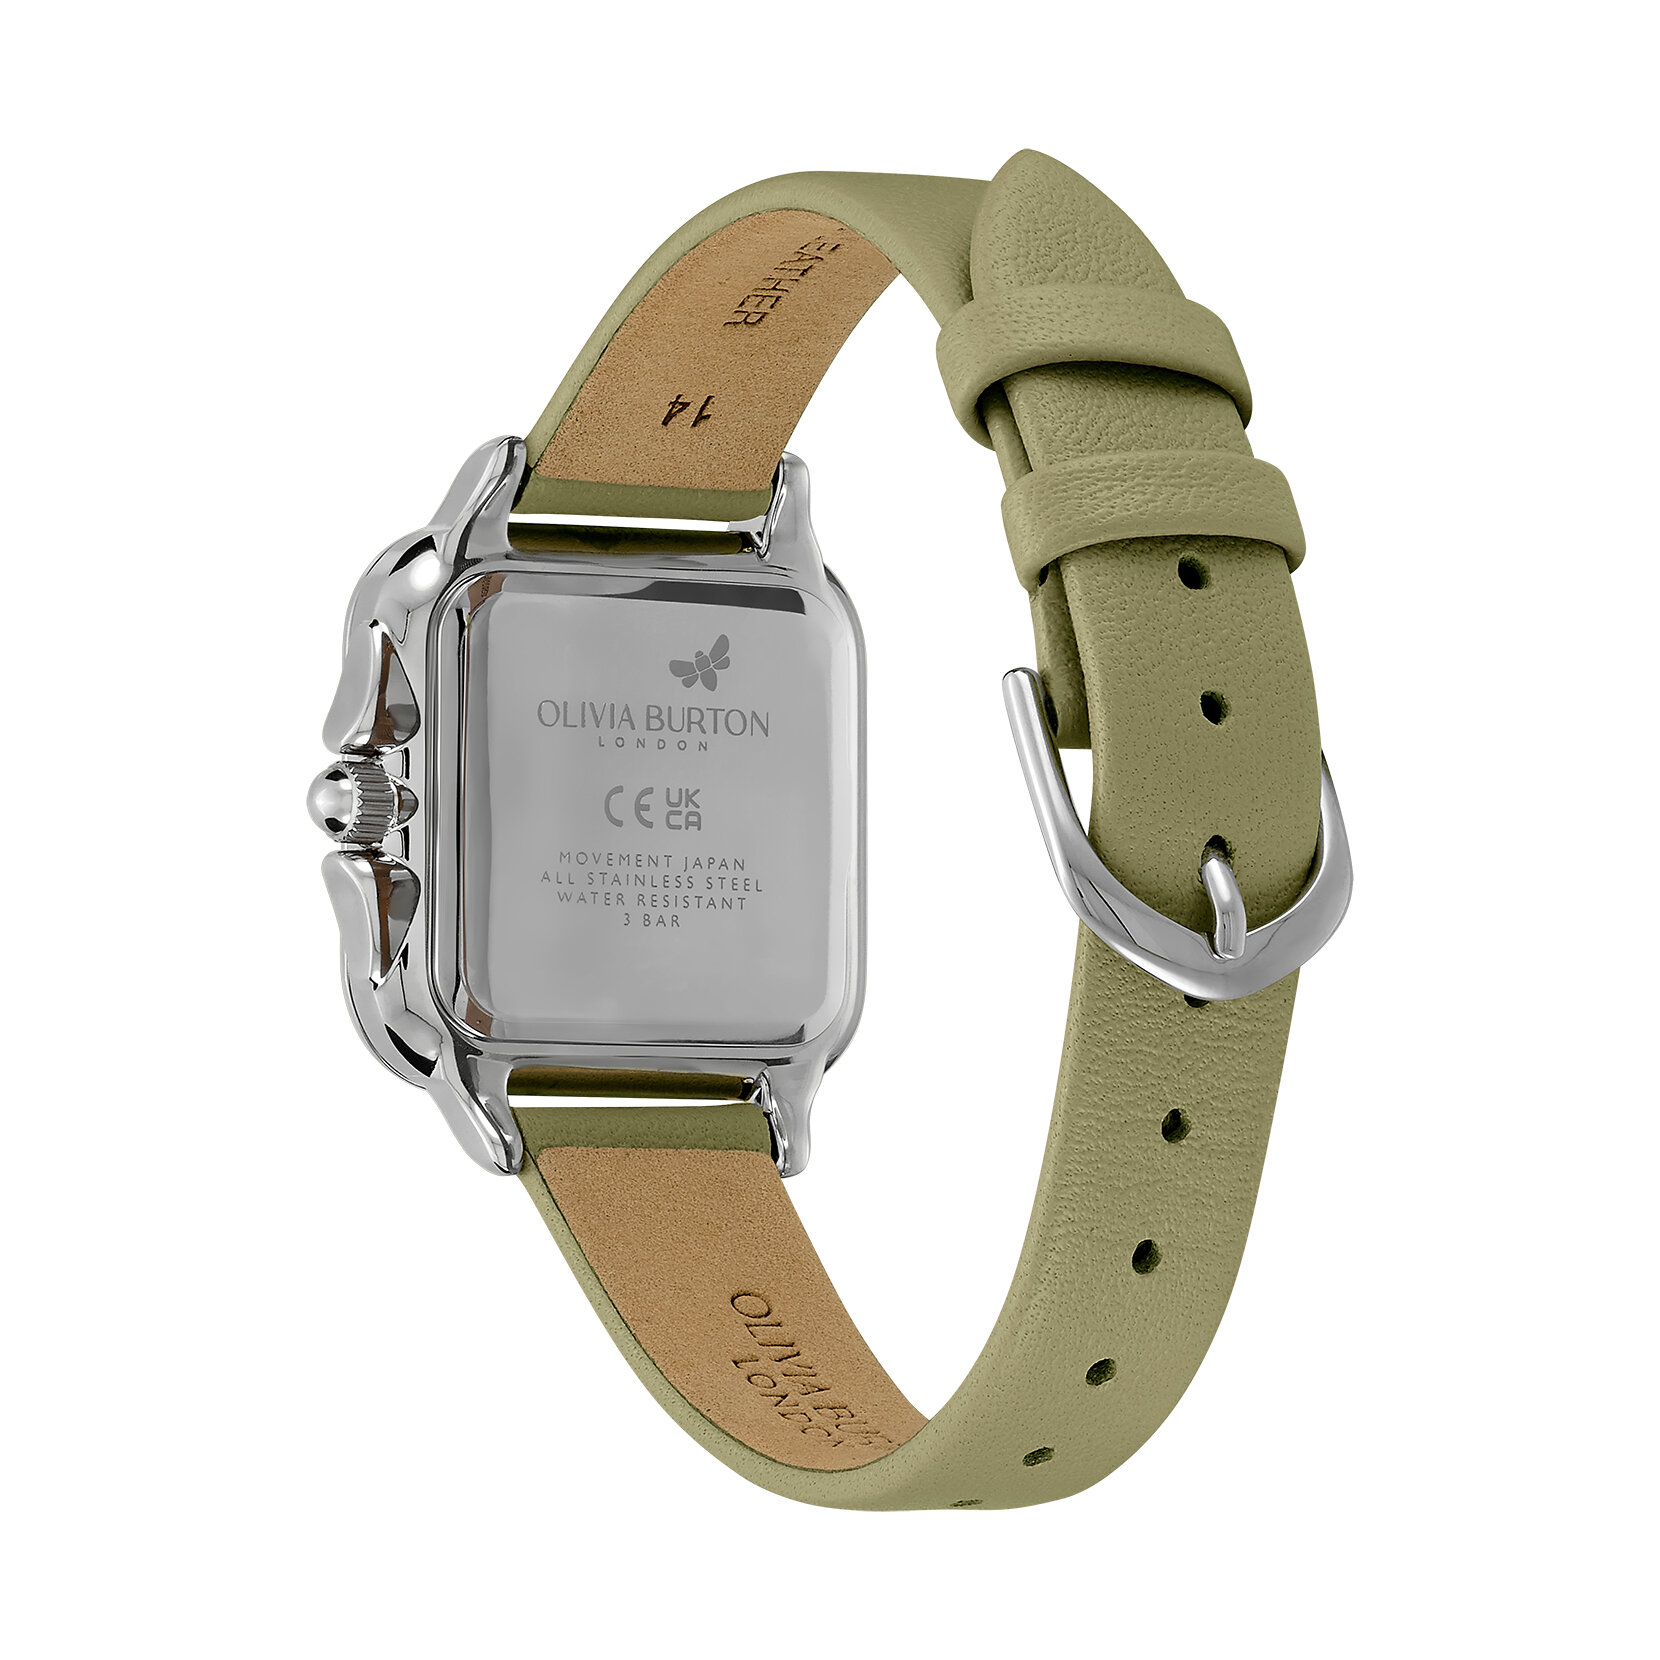 28mm Grosvenor Silver & Sage Green Leather Strap Watch